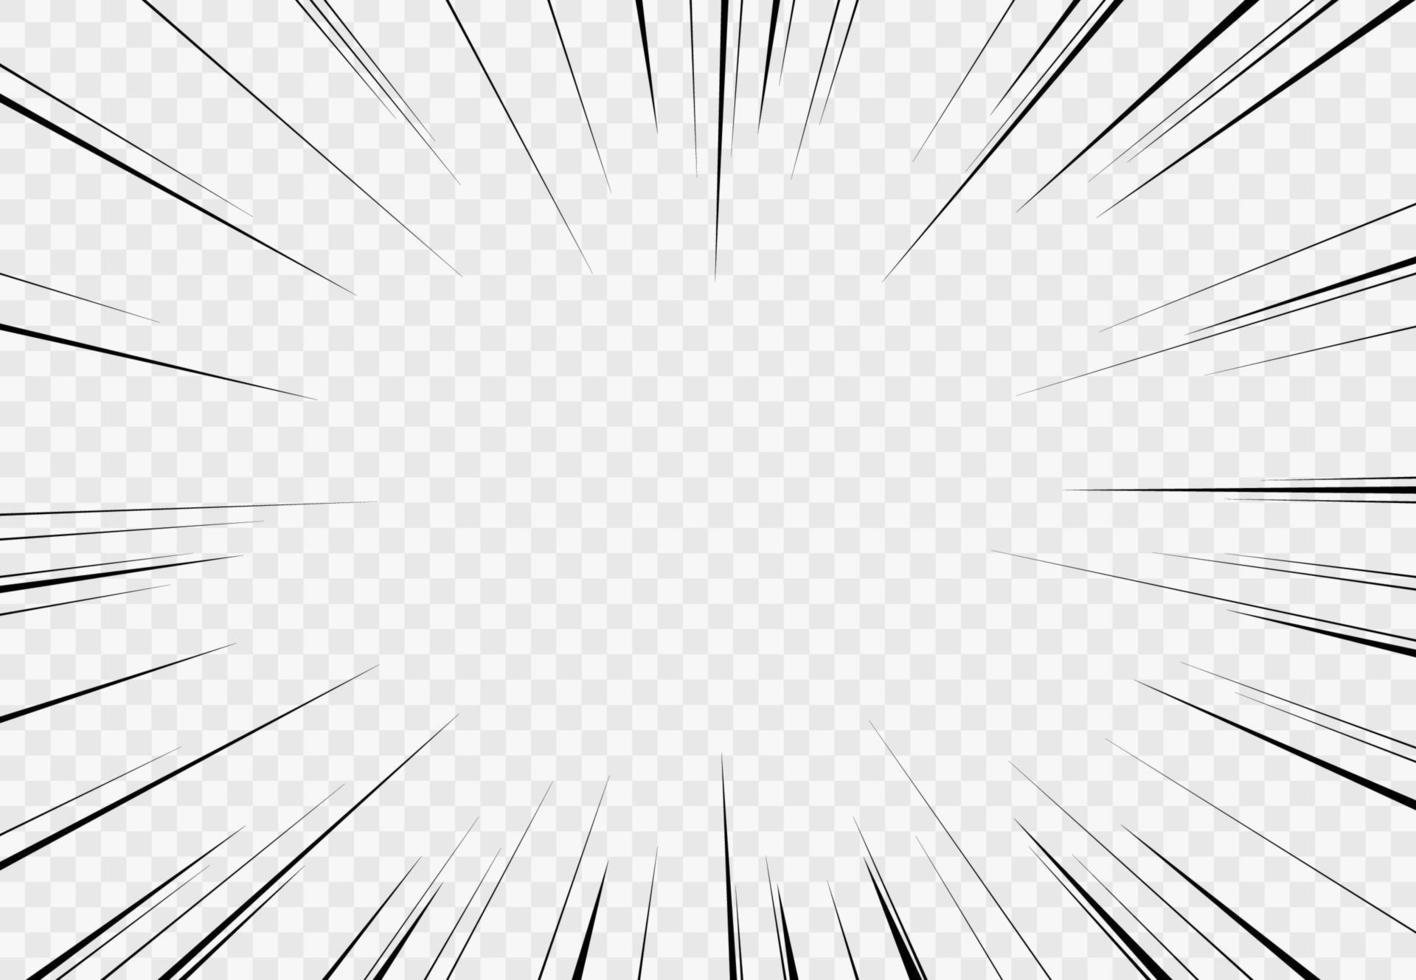 manga transparant achtergrond, explosie snelheid lijn vector